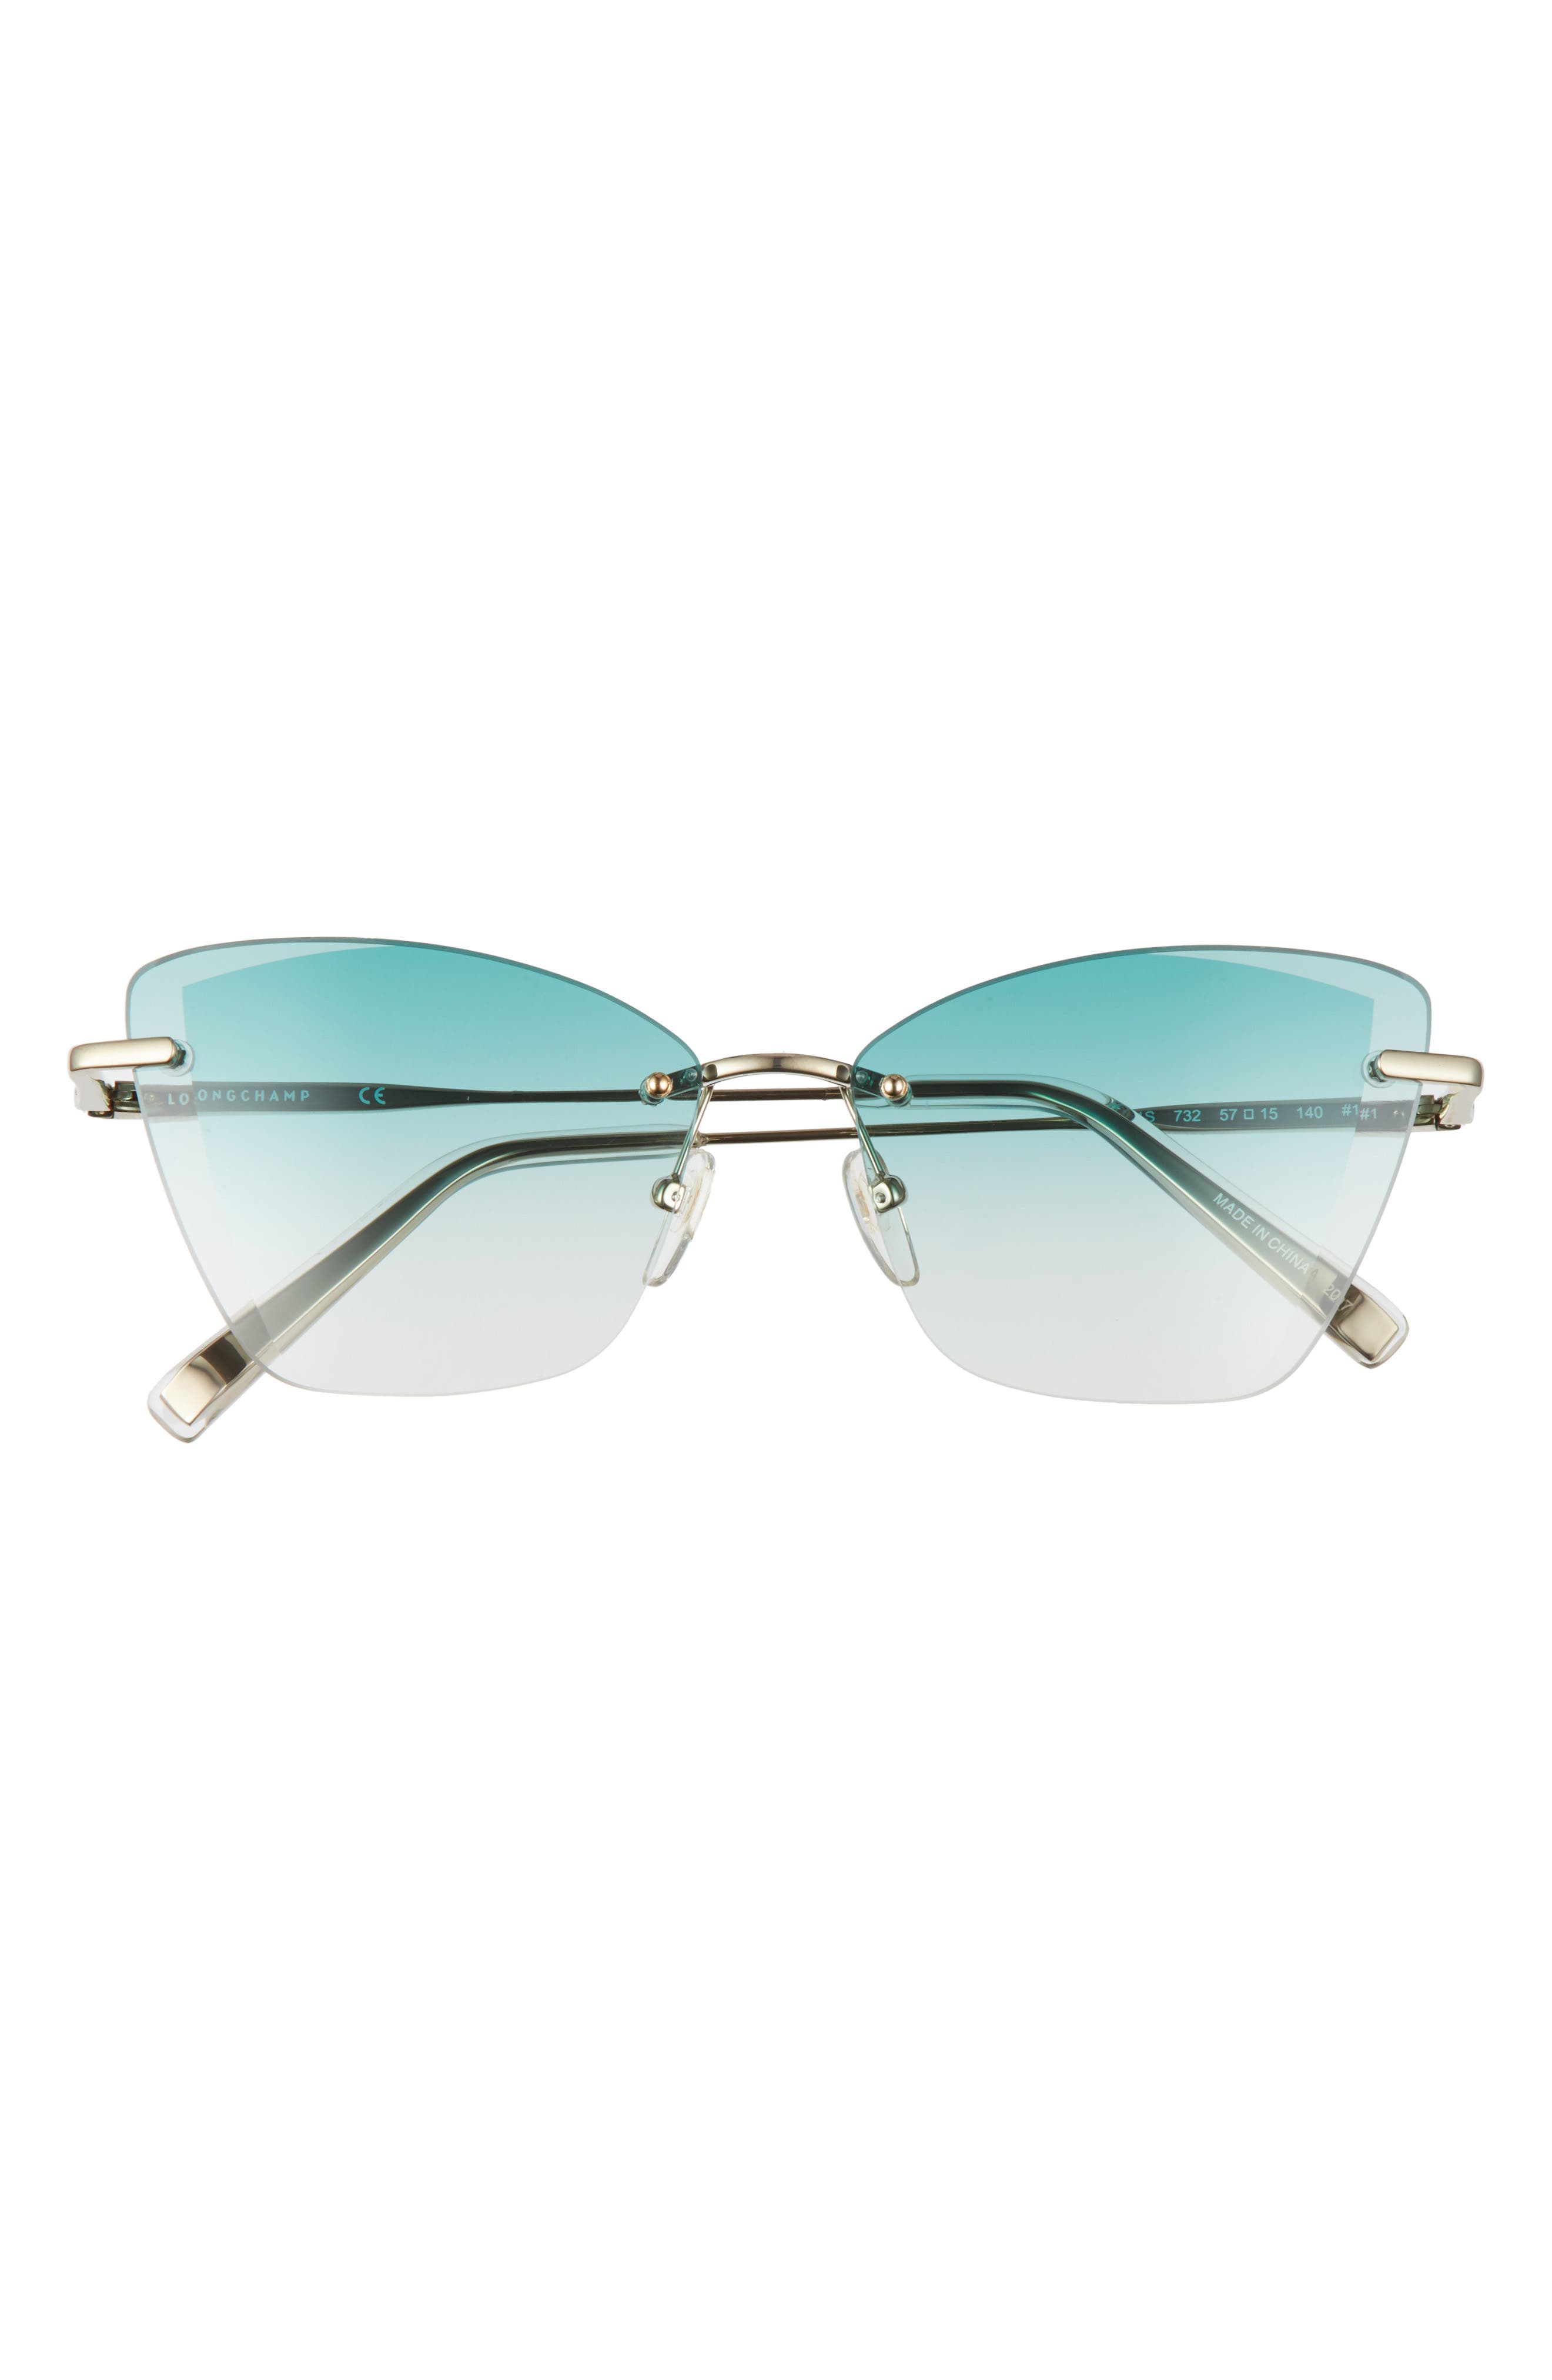 longchamp women's sunglasses